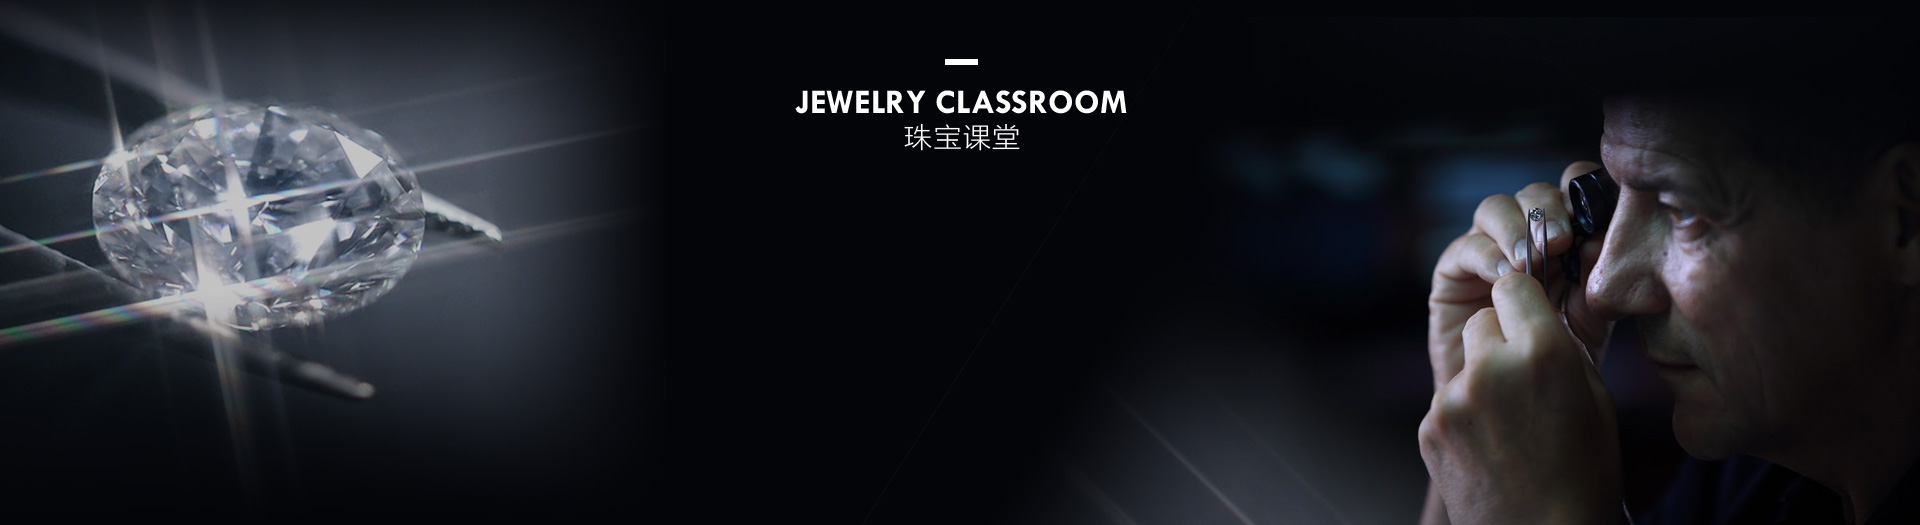 pc_jewelry_classroom-bg.jpg